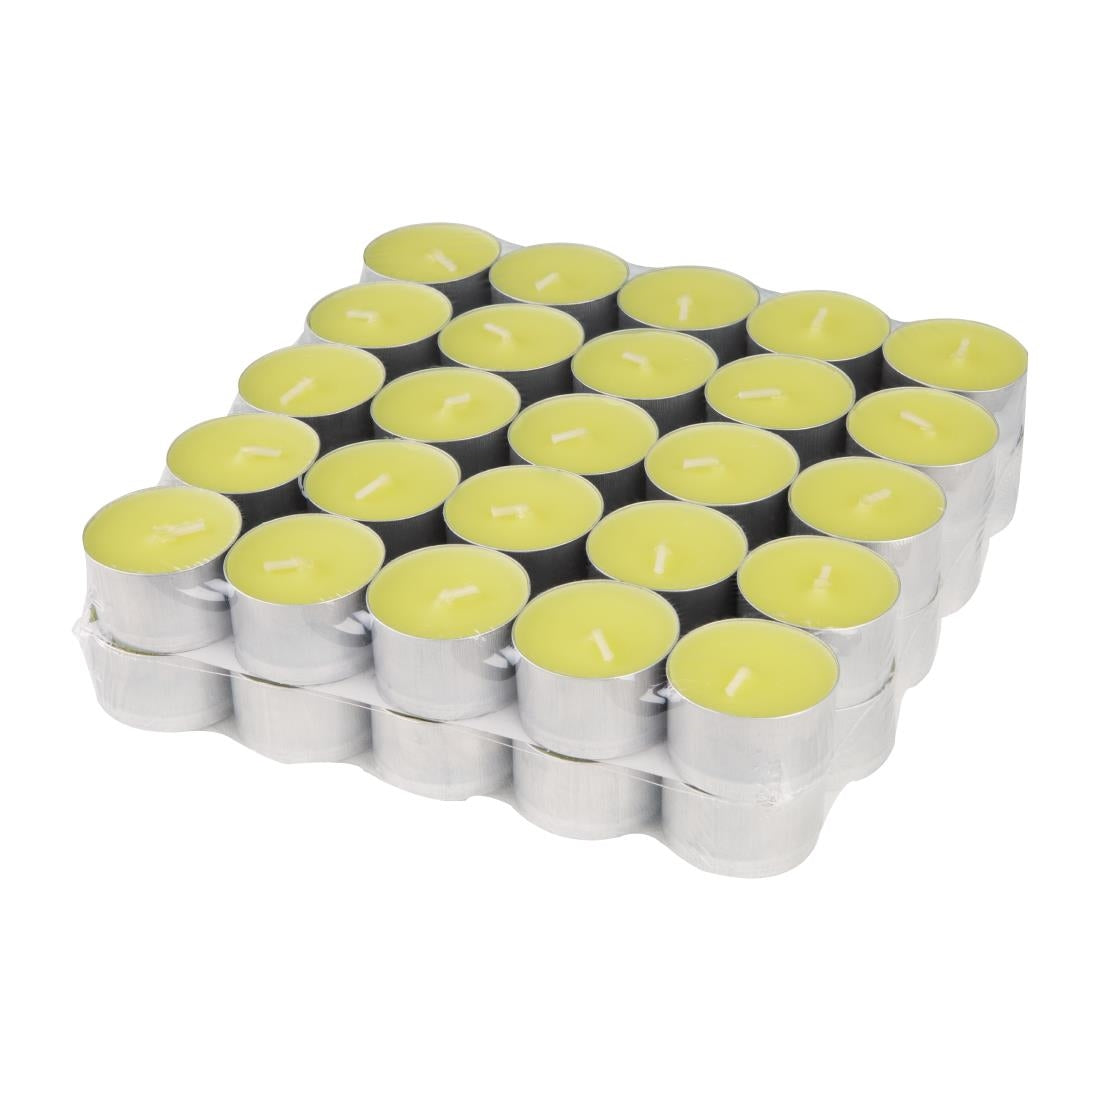 DG211 Eazyzap Citronella Tea Lights (Pack of 50) JD Catering Equipment Solutions Ltd